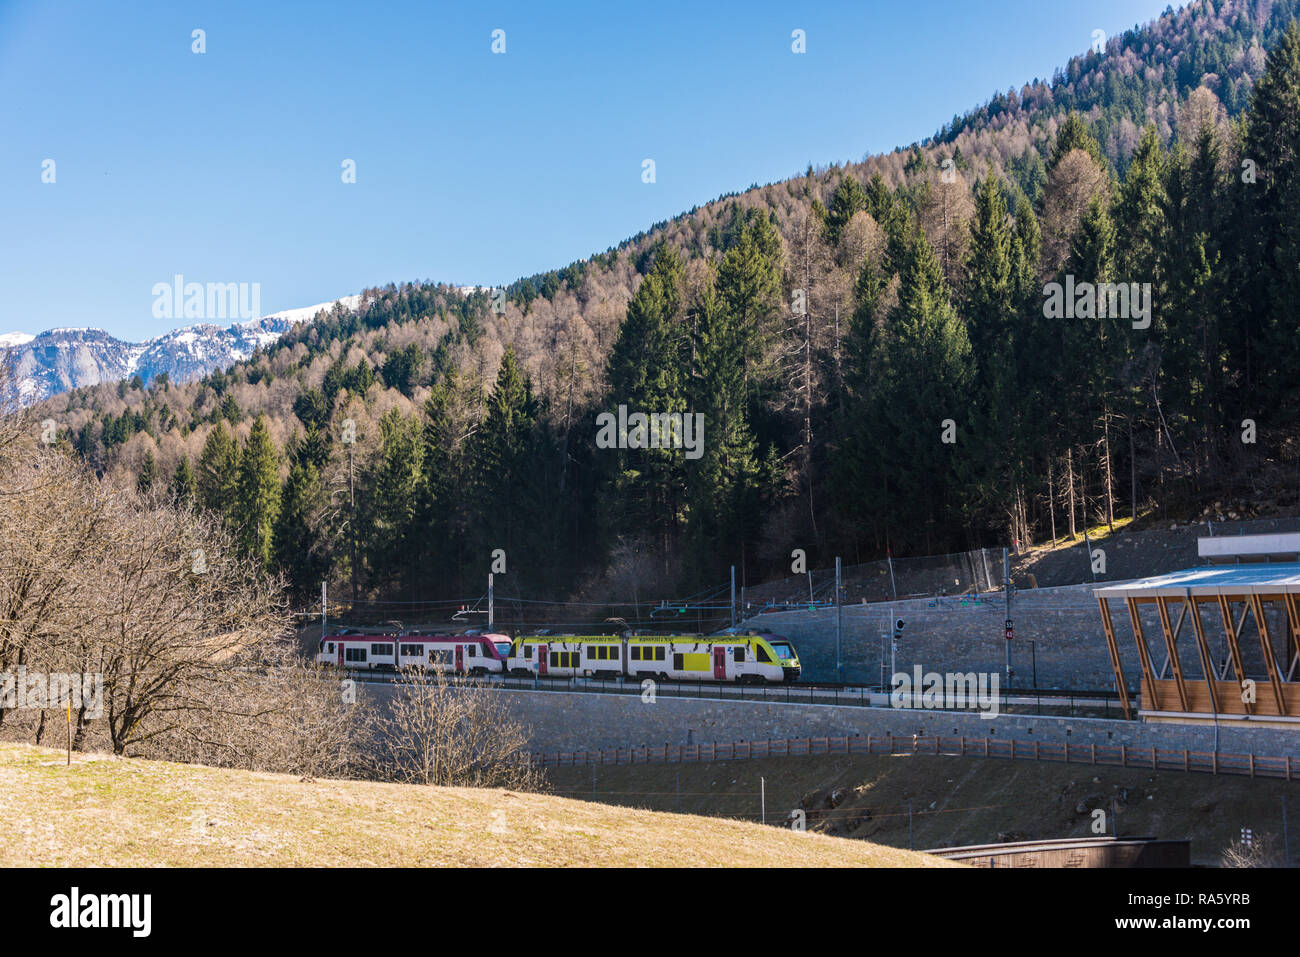 Mountain train arrivant à la gare de Mezzana. La dernière gare sur Trento Malè Mezzana railway road. Région de Ski Val di Sole, Folgarida Marilleva Banque D'Images